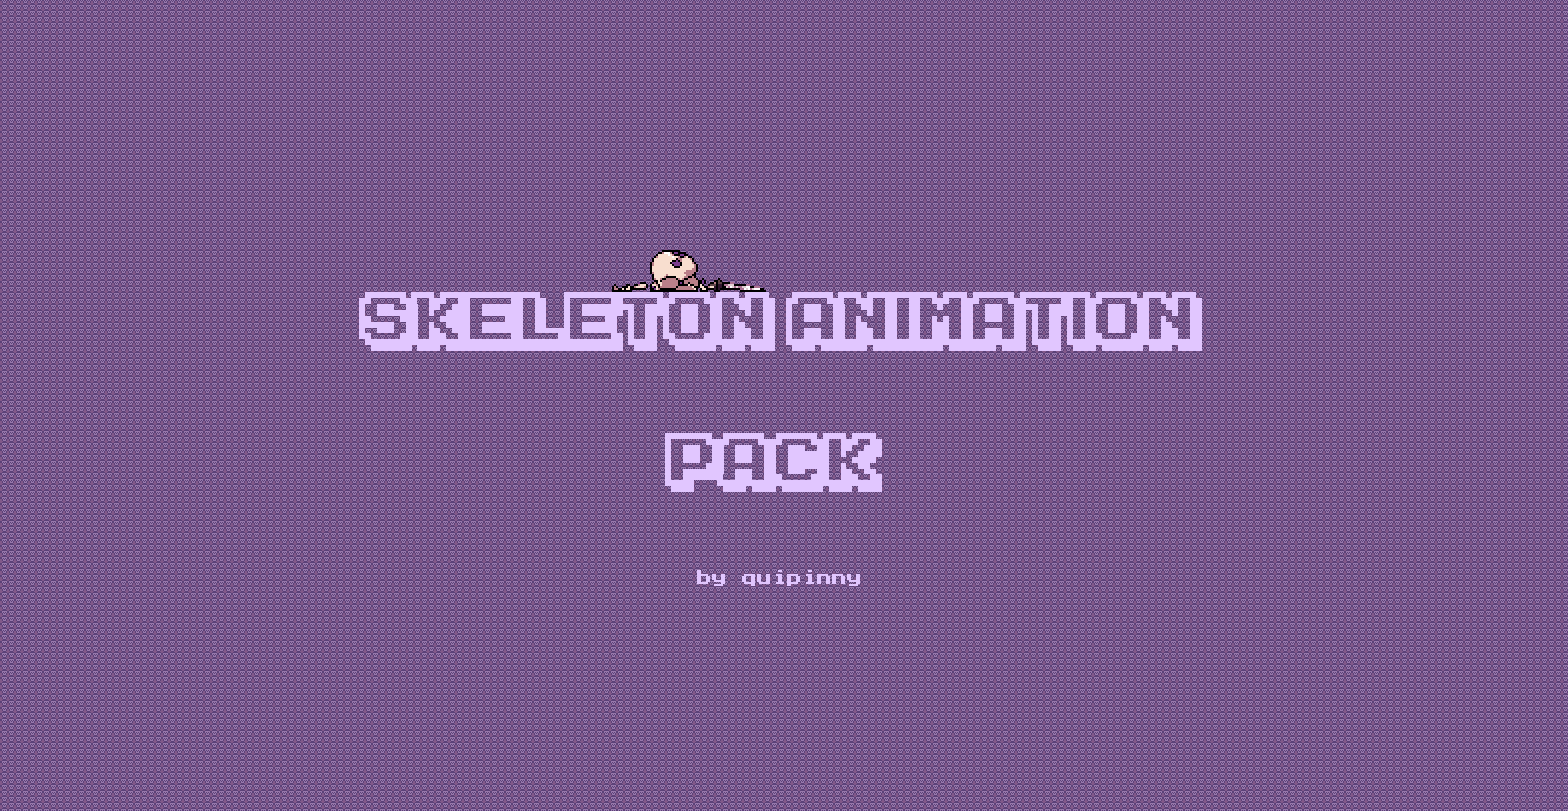 Skeleton animation pack